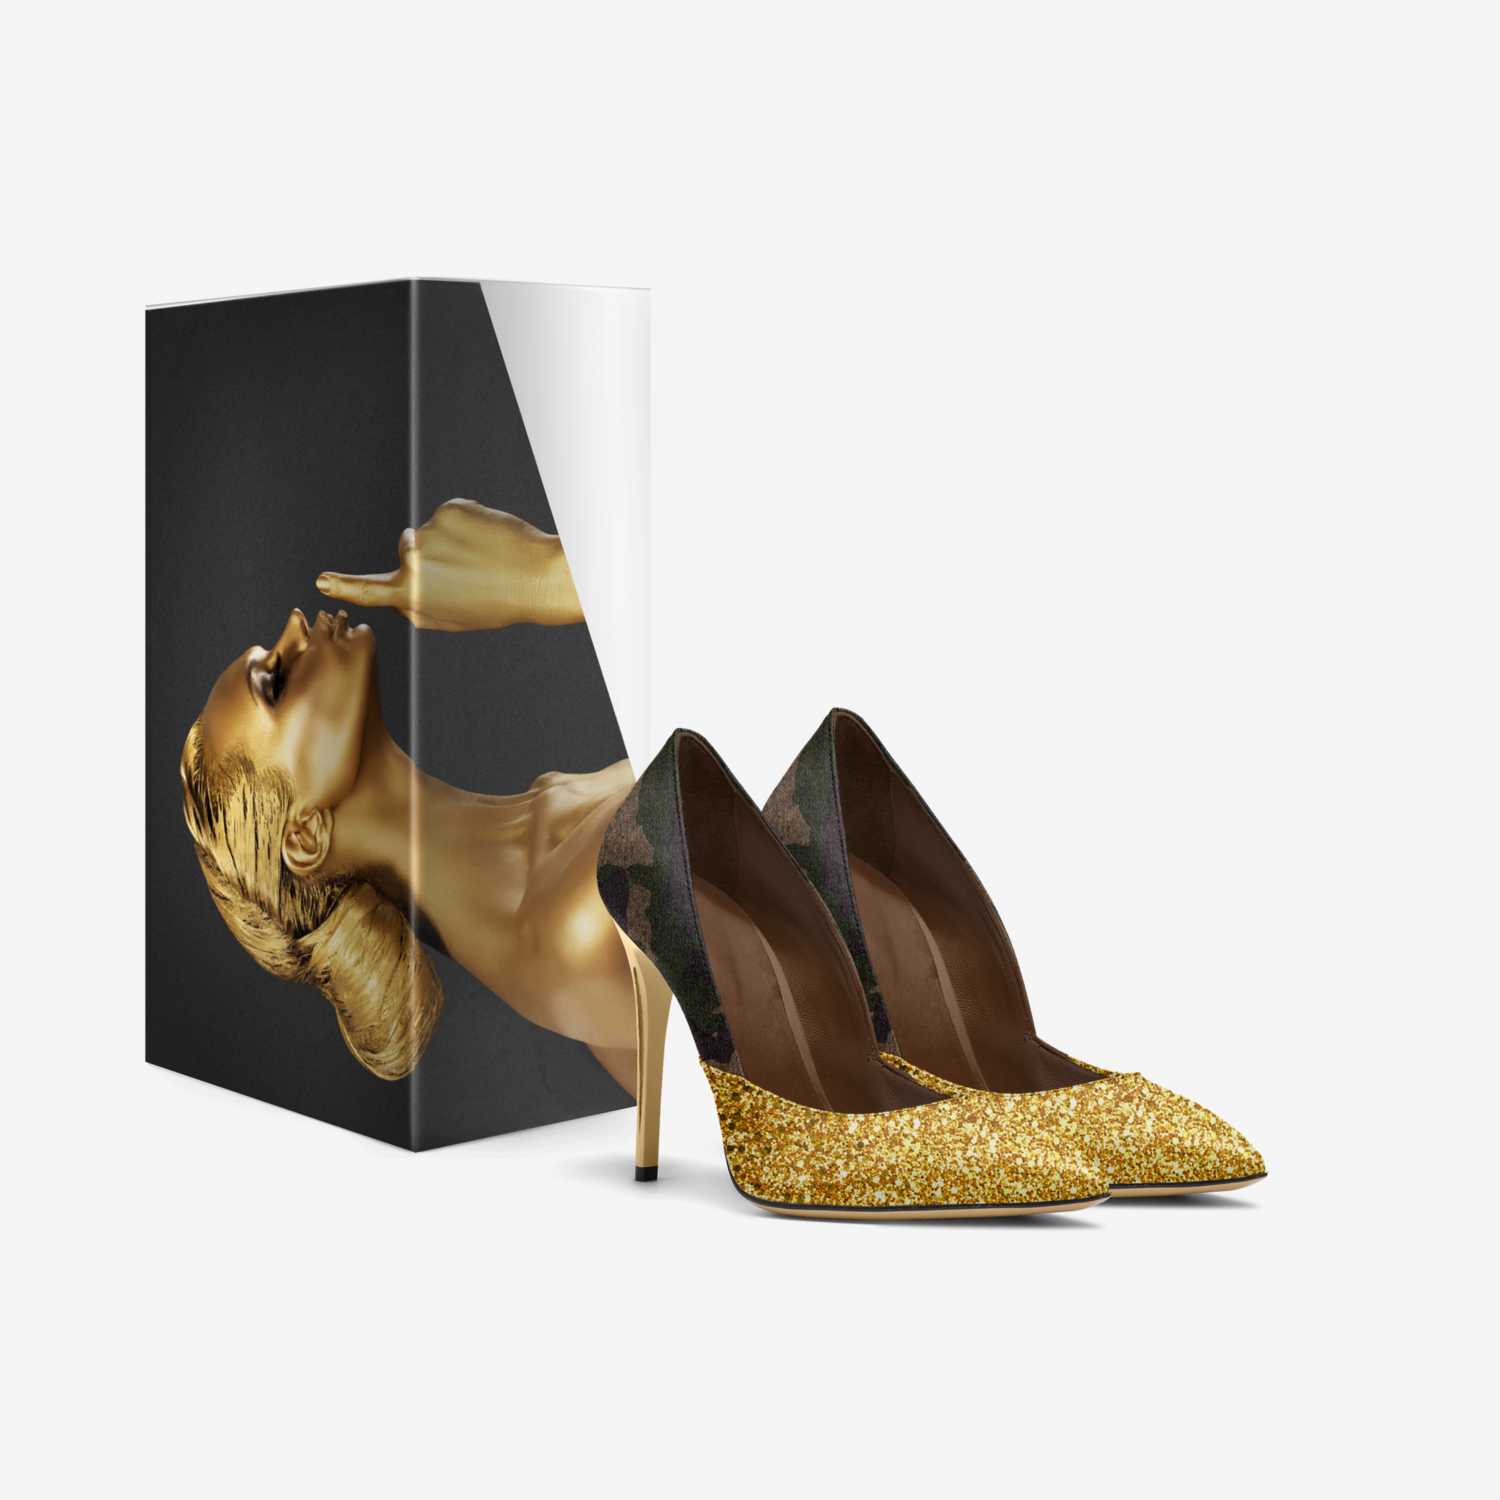 DiamondsLove  custom made in Italy shoes by Christina Leach | Box view